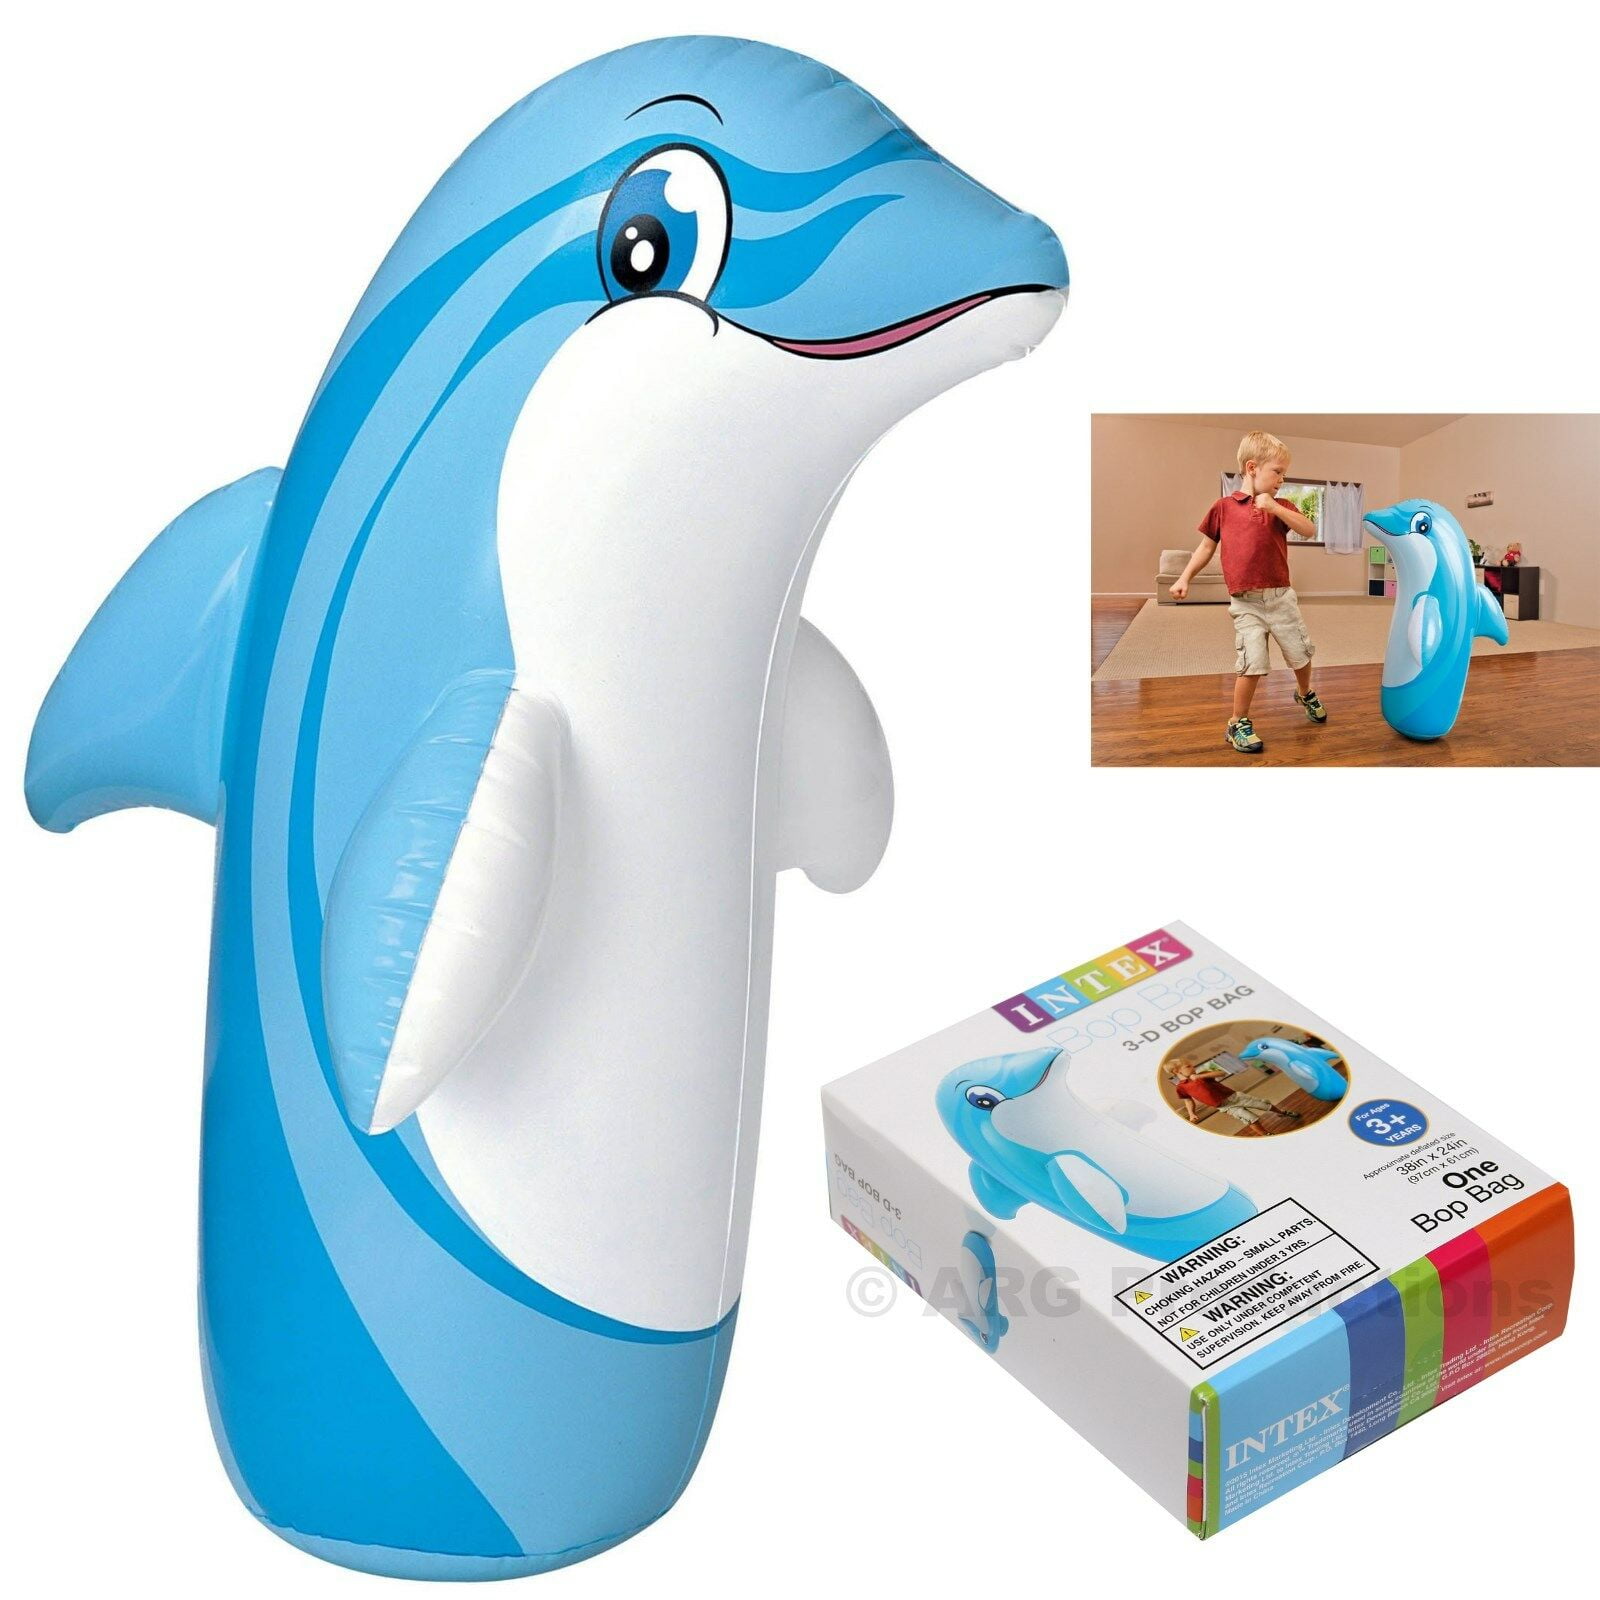 DEER Inflatable Punching Bag TOY 3D Bop Bag Blow Up Kids Fun BEST GIFT KIDS 